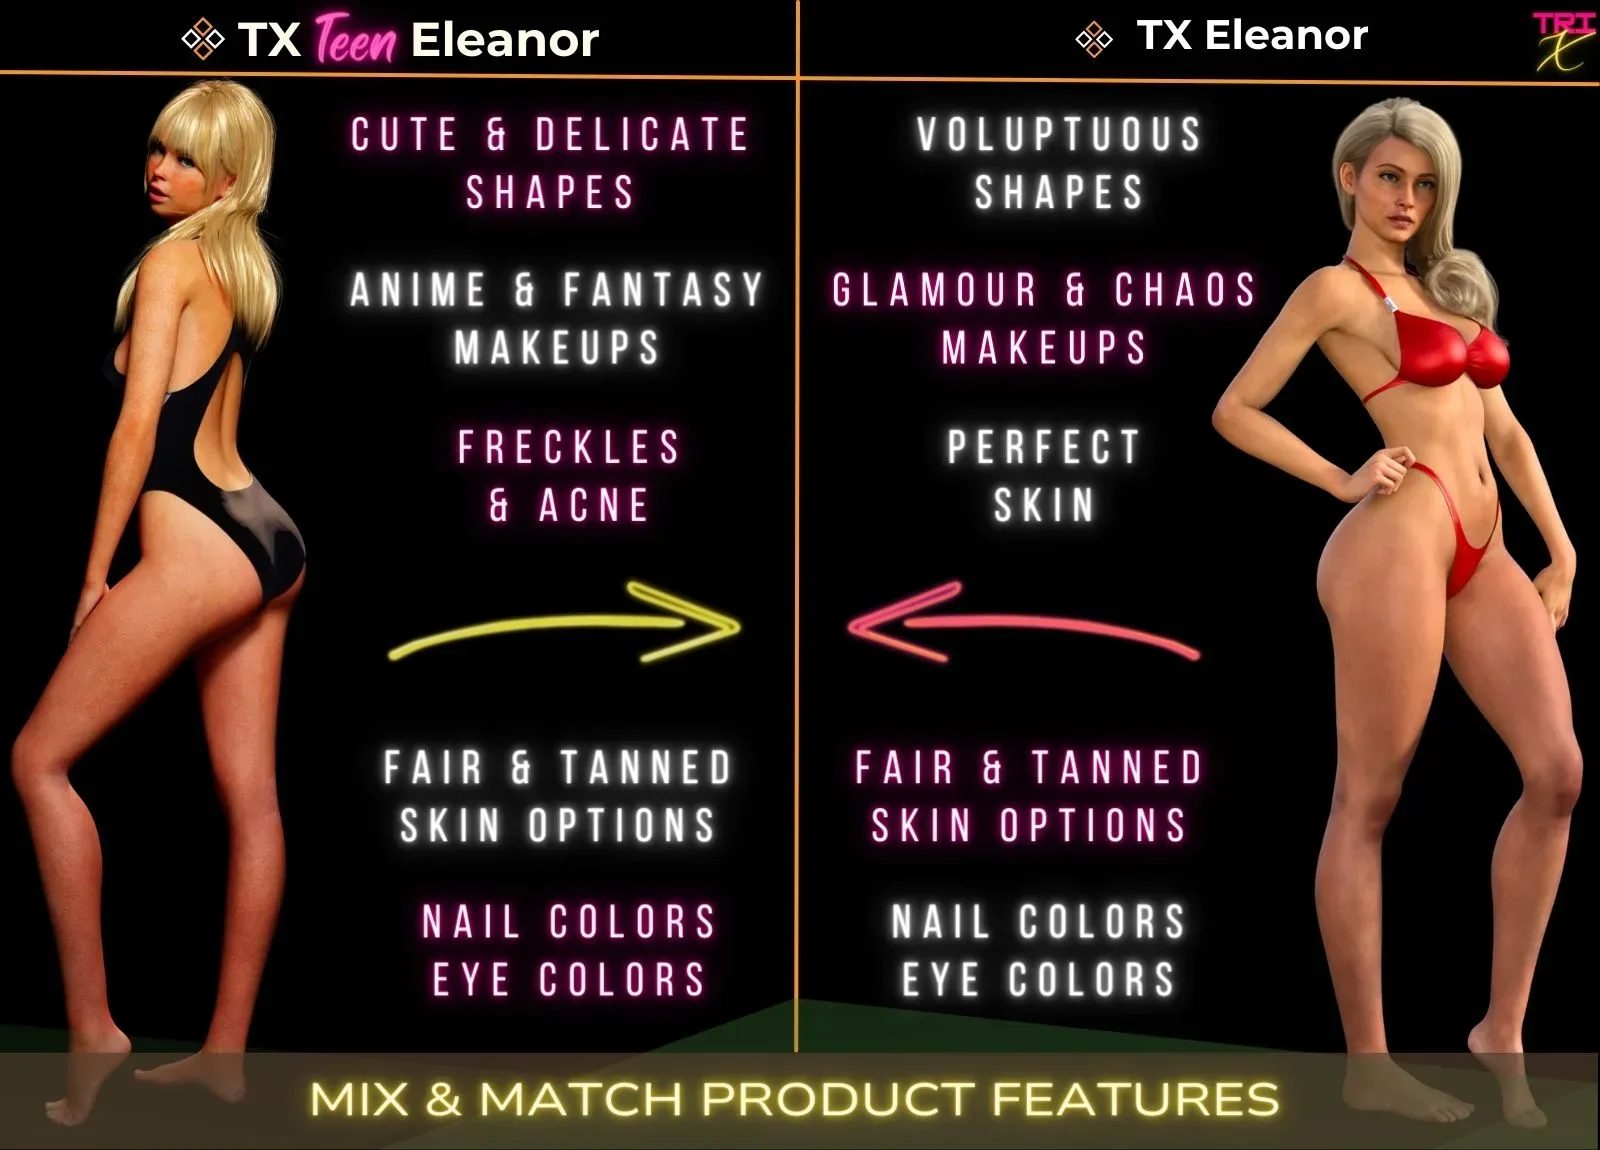 TX Teen Eleanor G9 Version